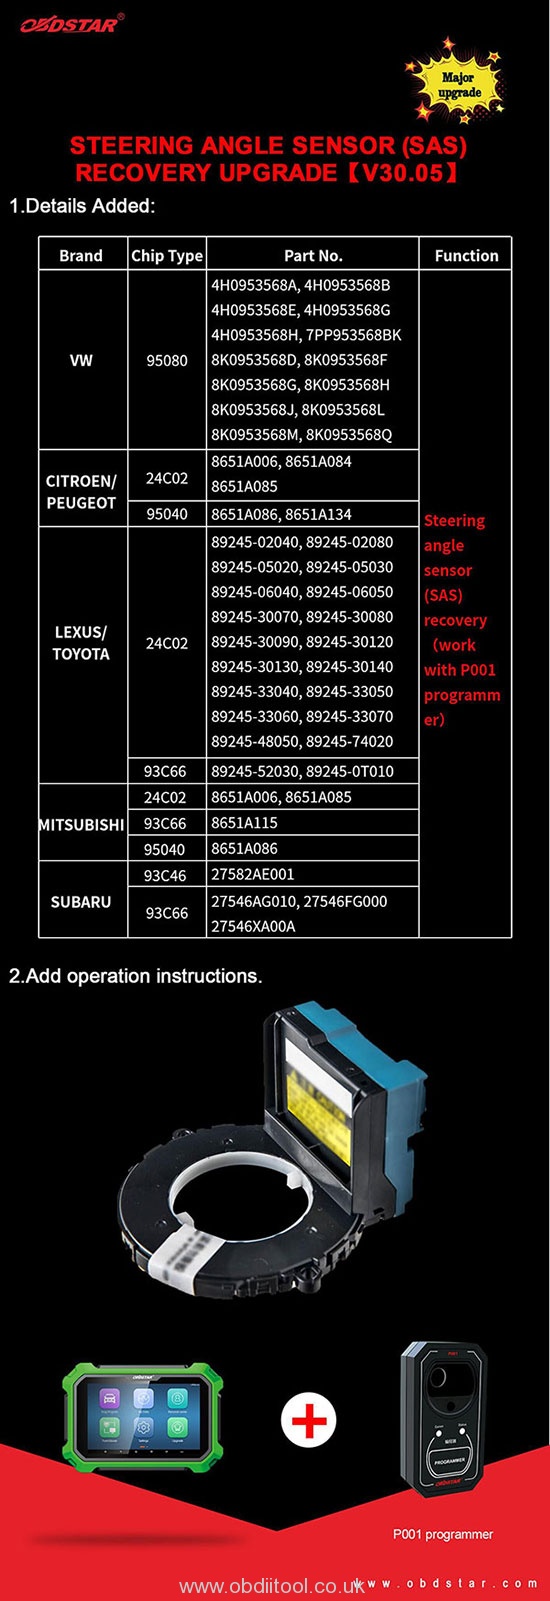 X300 Dp Plus X300 Pro4 Sas Immo Upgrade 1